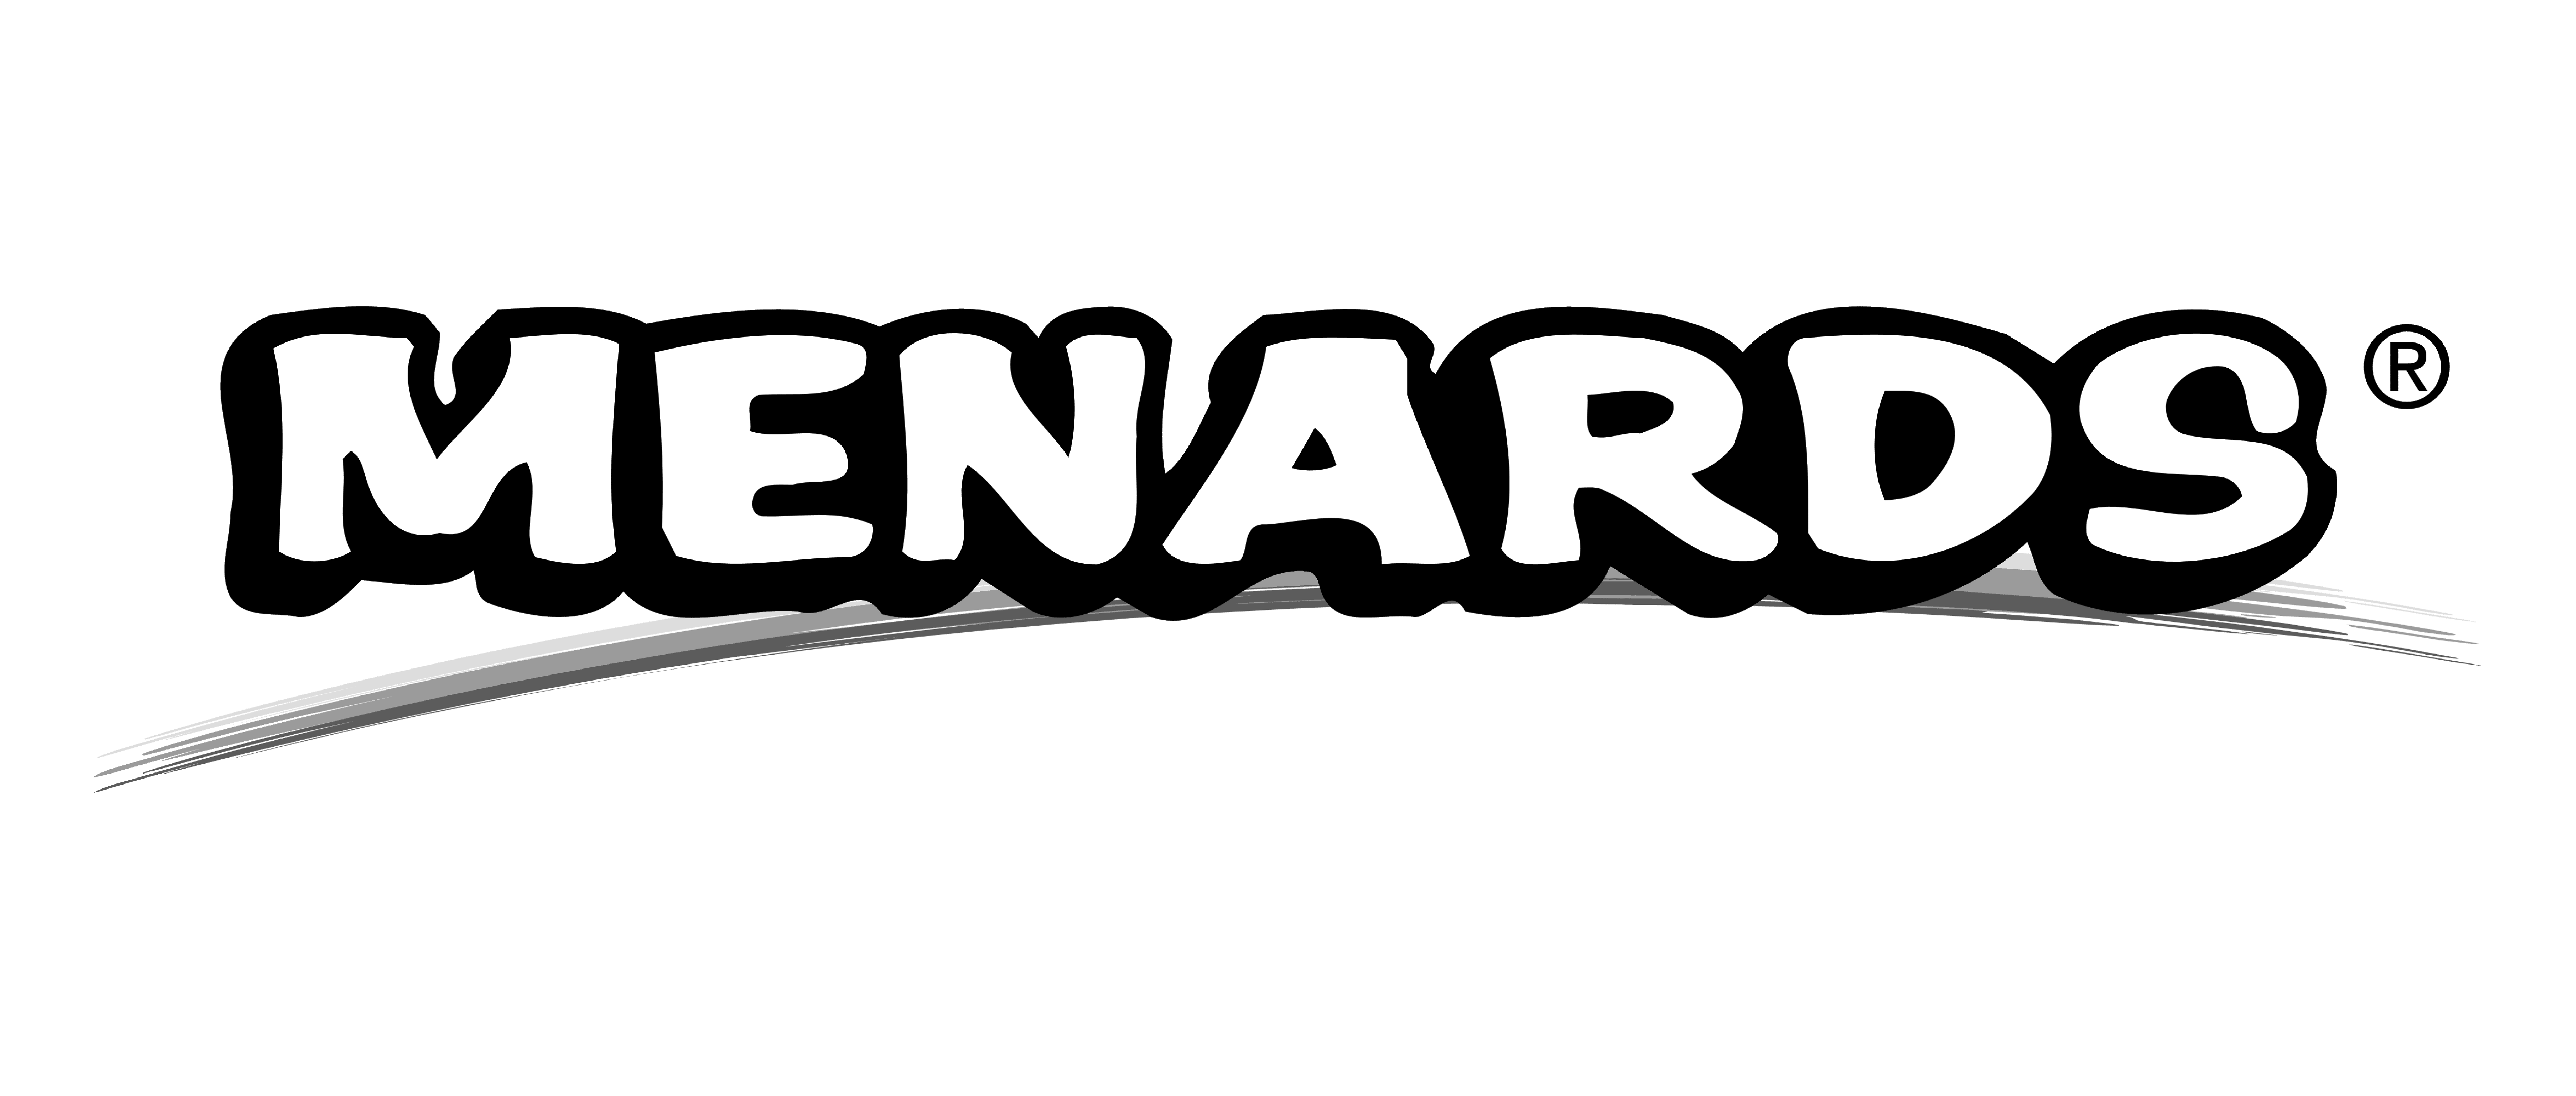 menards_greyscale_logo